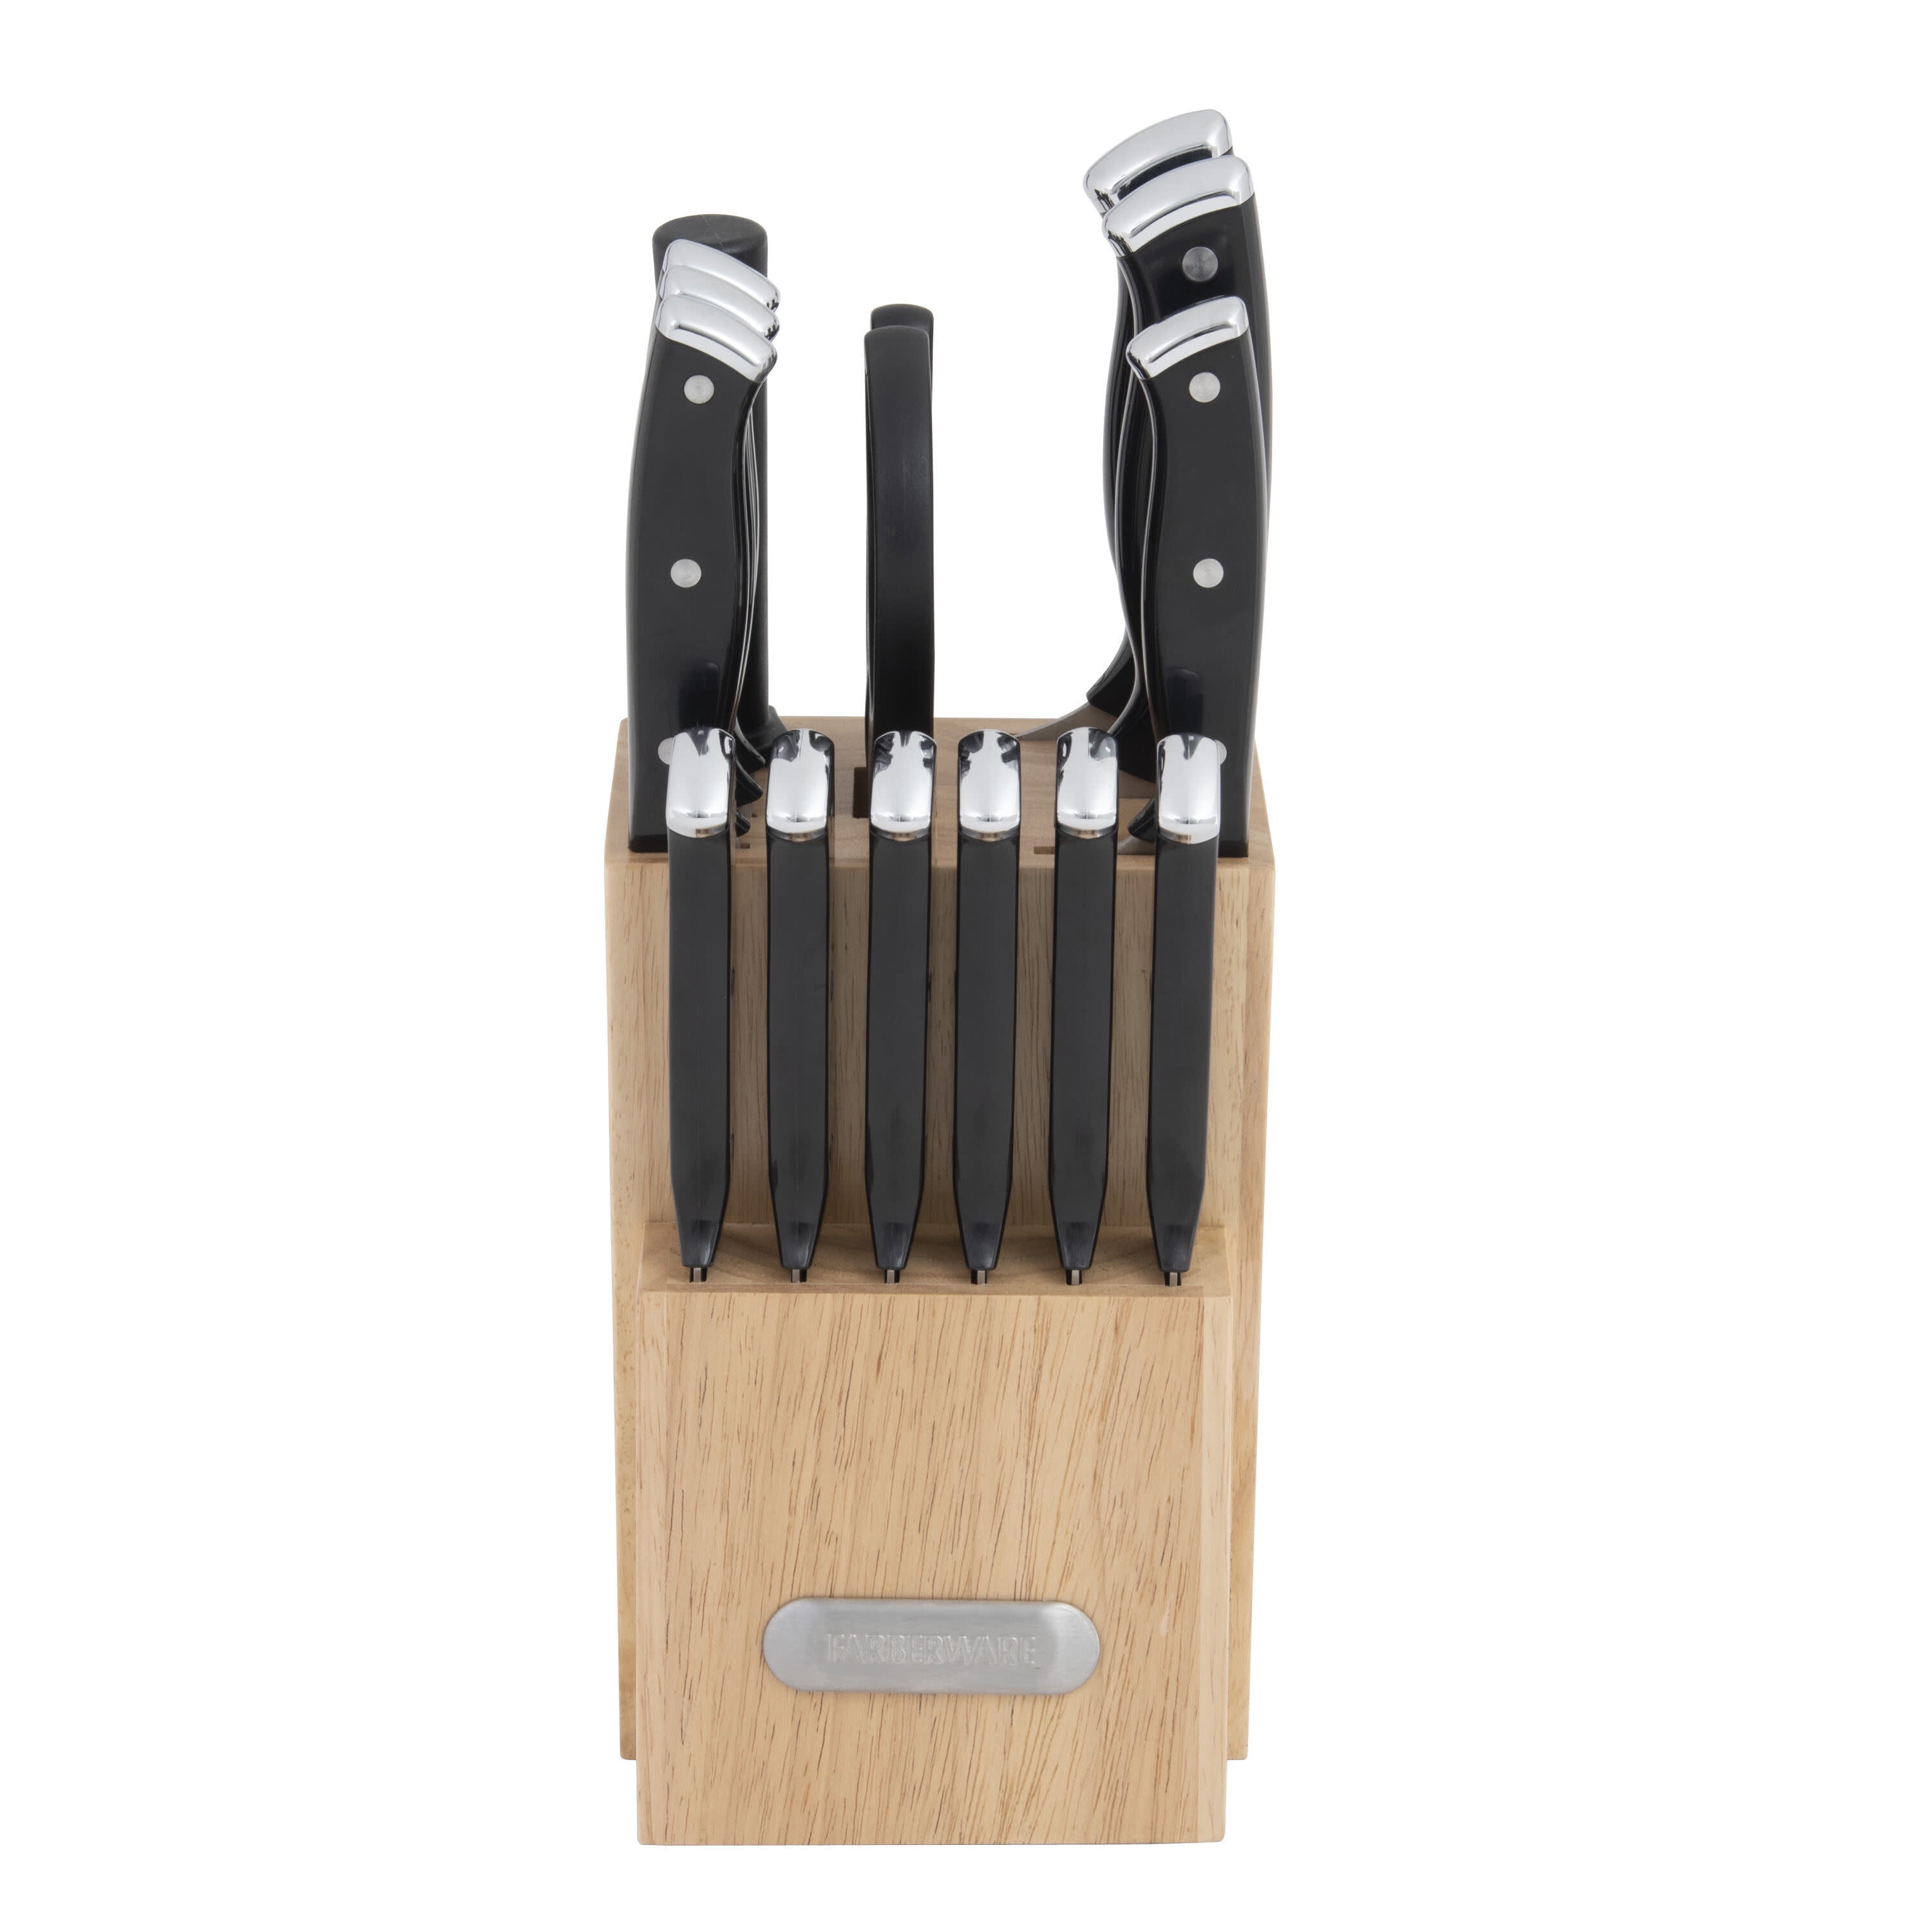 Farberware Knife Set, 15-Piece Stainless Steel Knife Block Set - Black –  Môdern Space Gallery